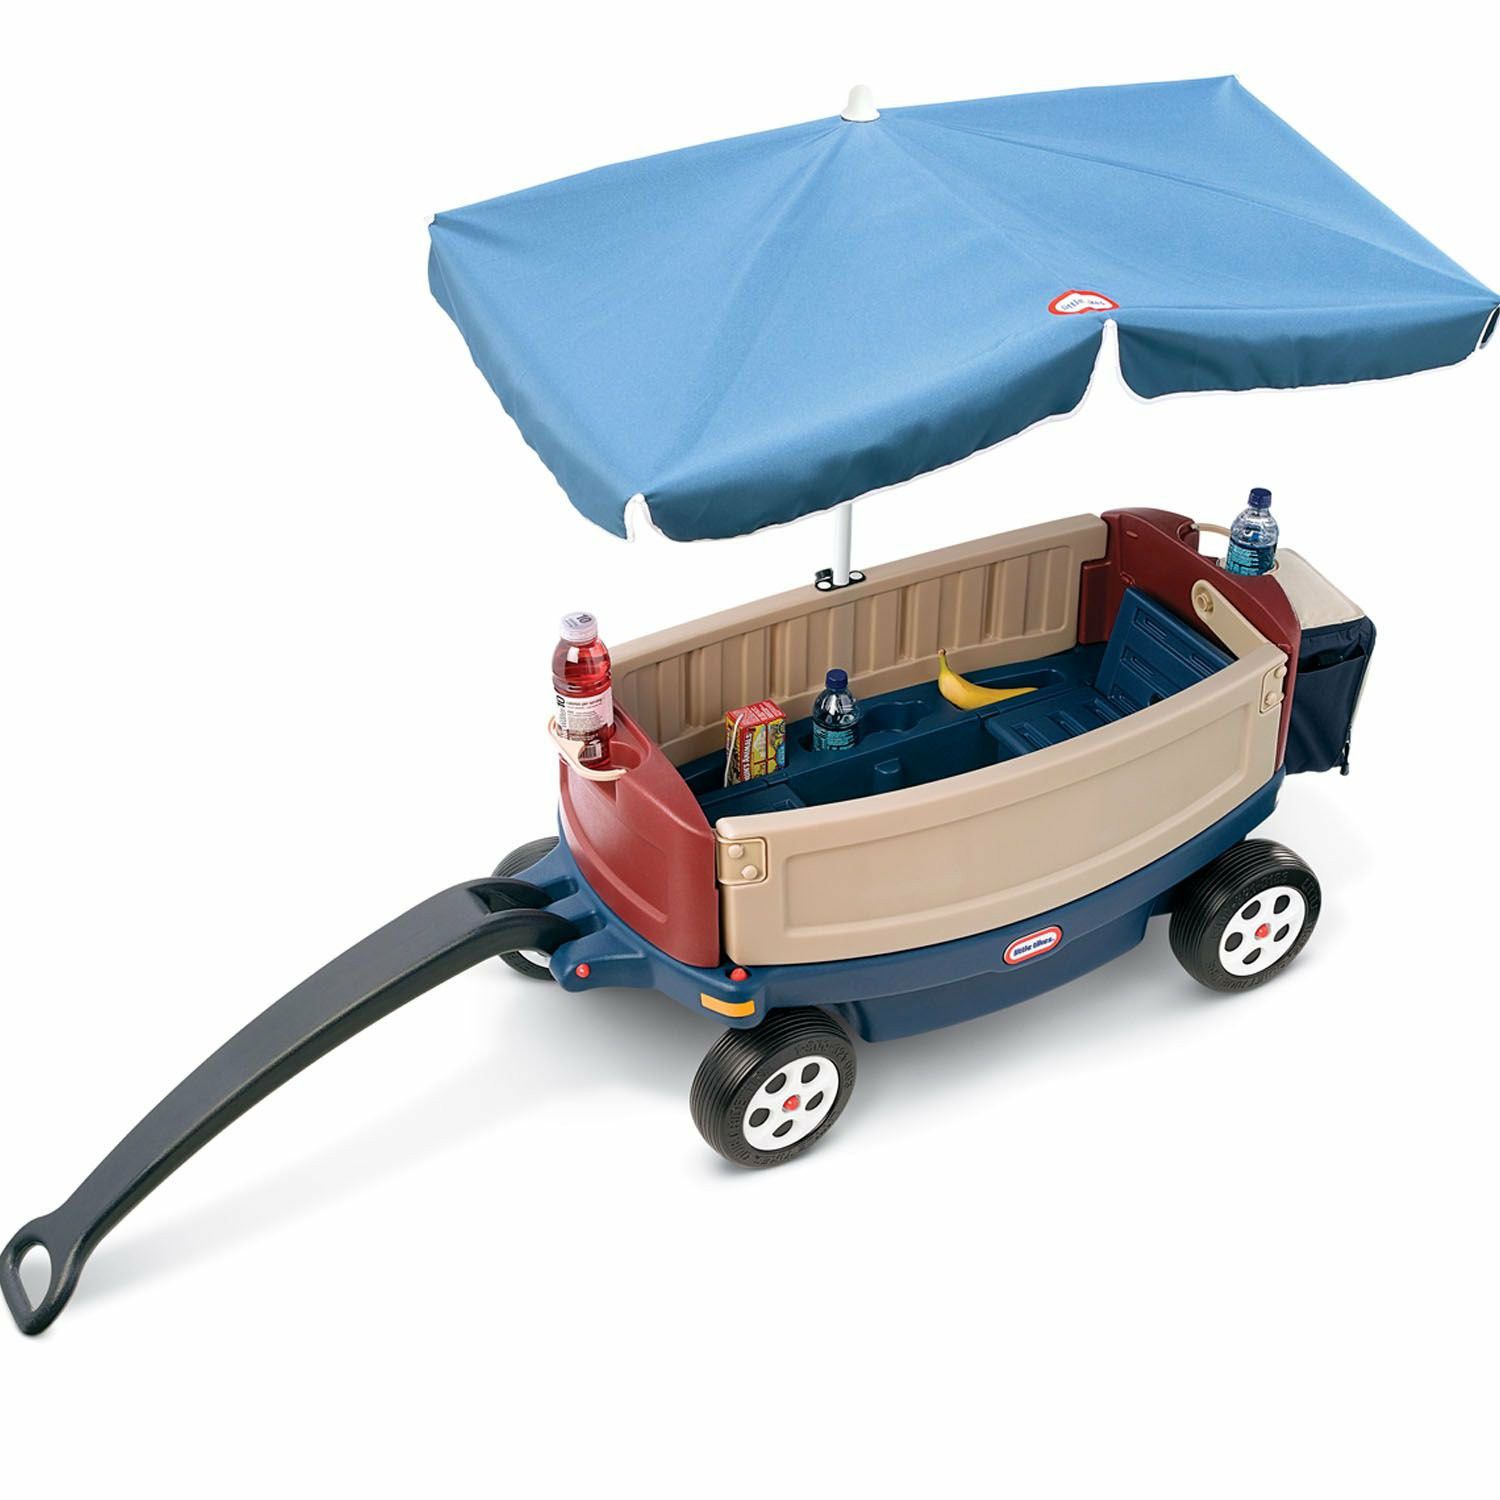 Kids WAGON- Excellent cond-Little Tikes - will take best offer- convertable bench, underneath storage, umbrella